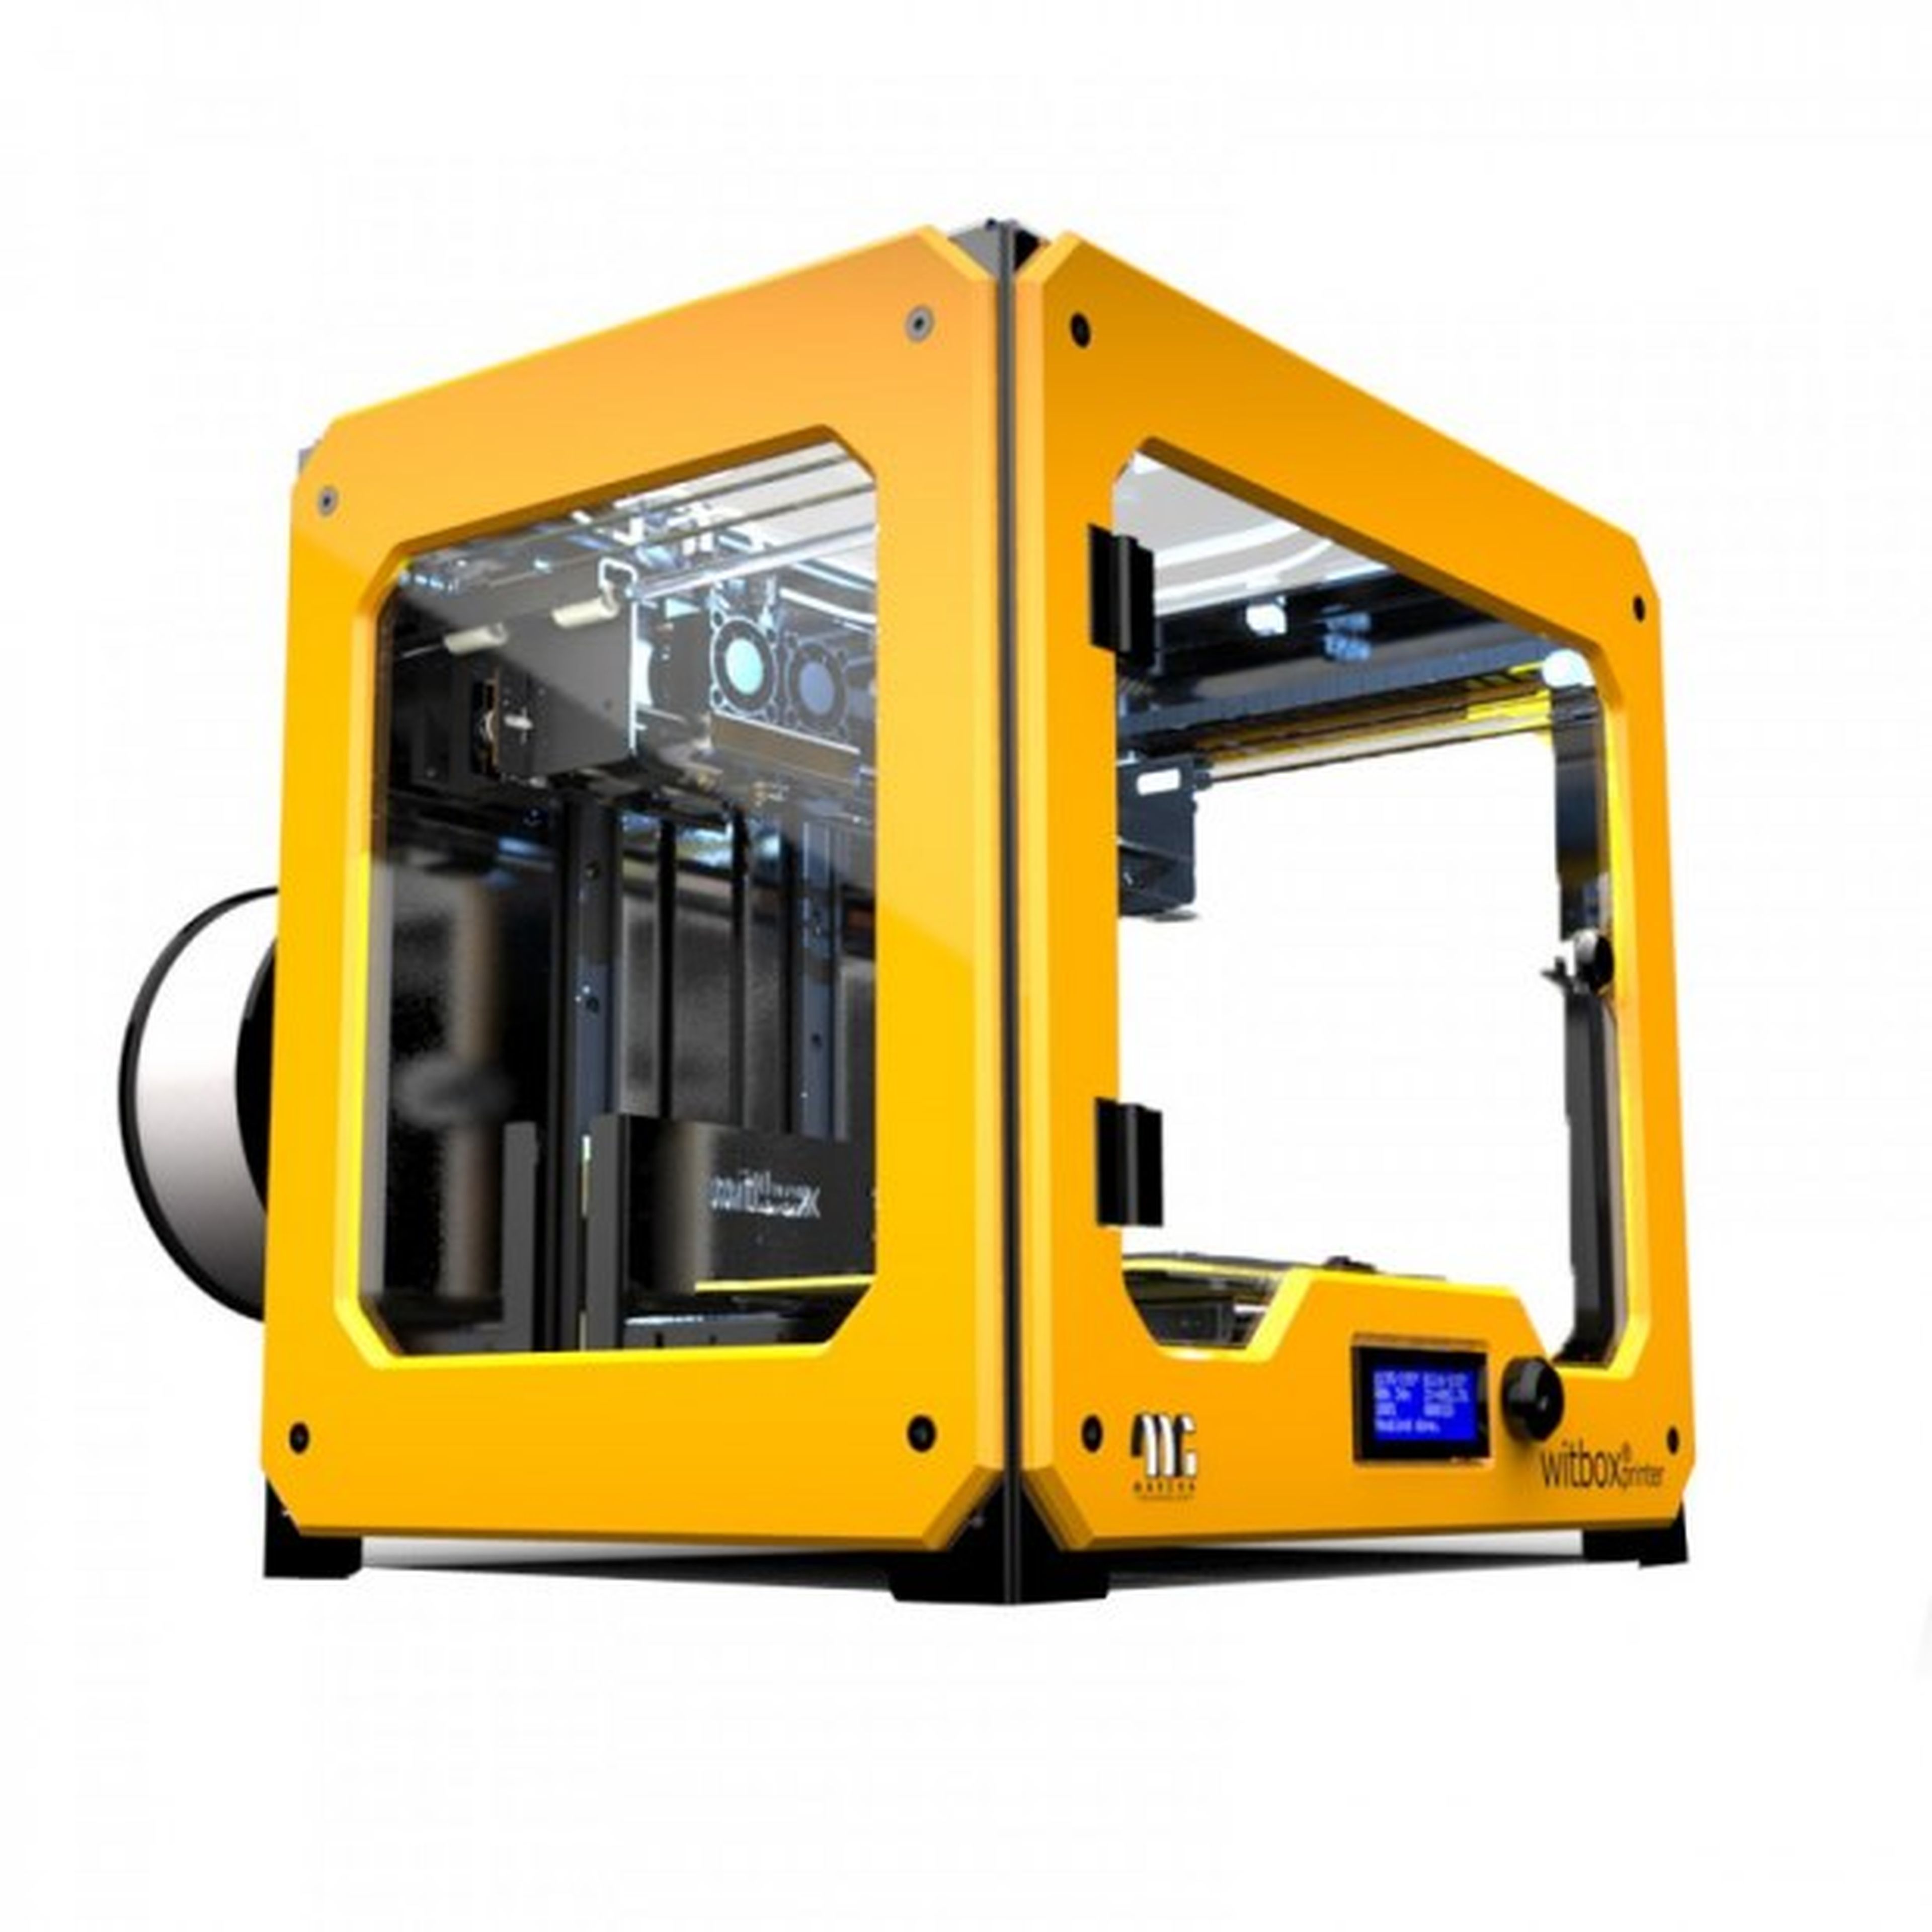 bq Witbox, otra impresora 3D de marca española Computer Hoy